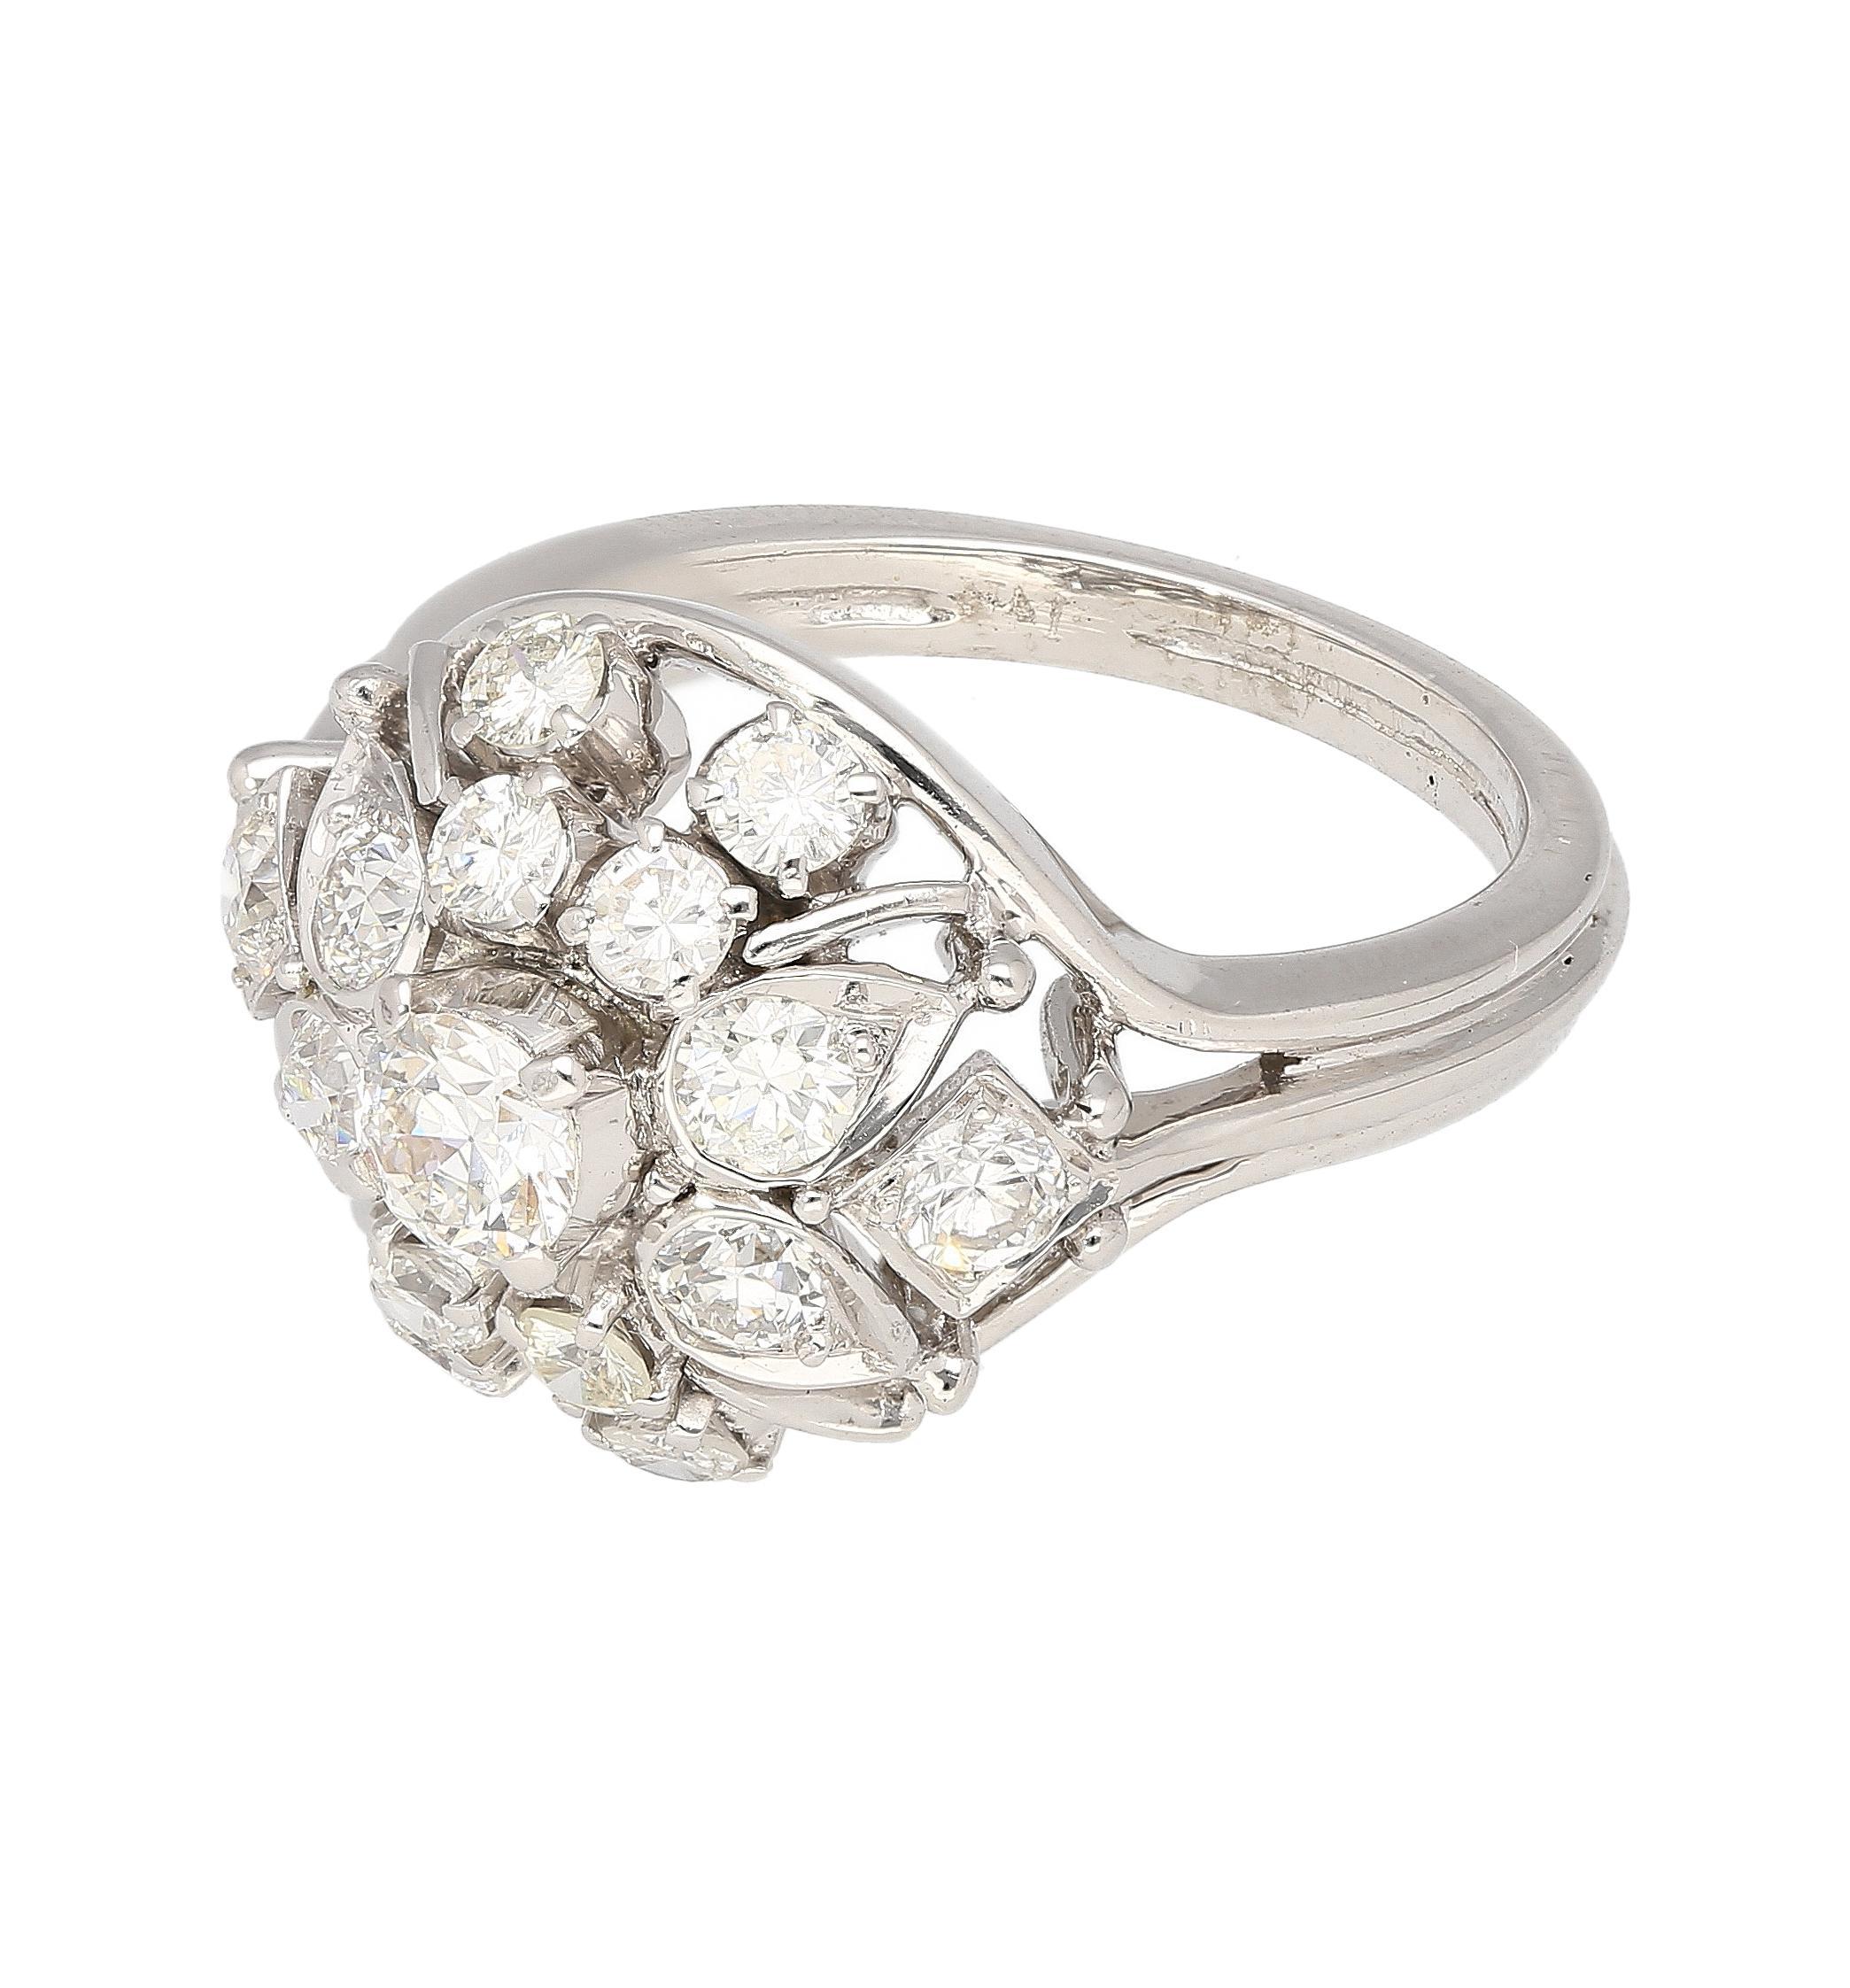 Modern Vintage 1.30 Carat Old Euro-Cut Diamond Flower Ring in 14k White Gold For Sale